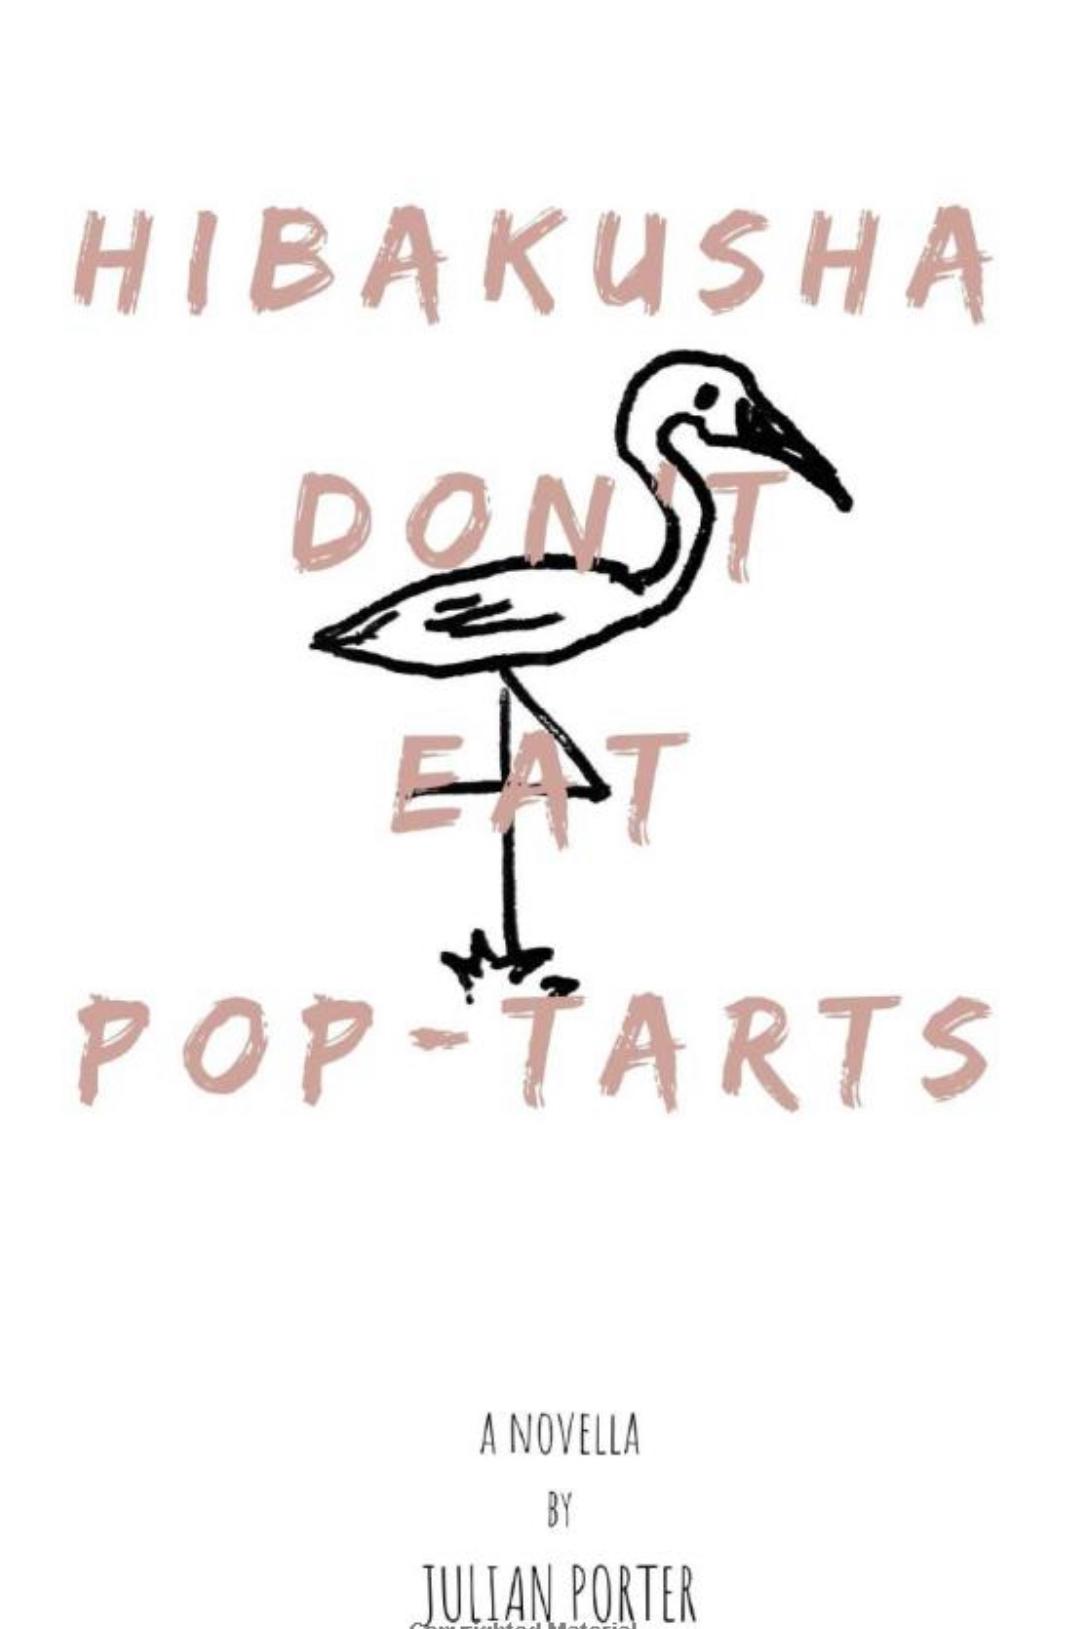 Book cover of Hibakusha Don’t Eat Pop-Tarts by Julian Porter